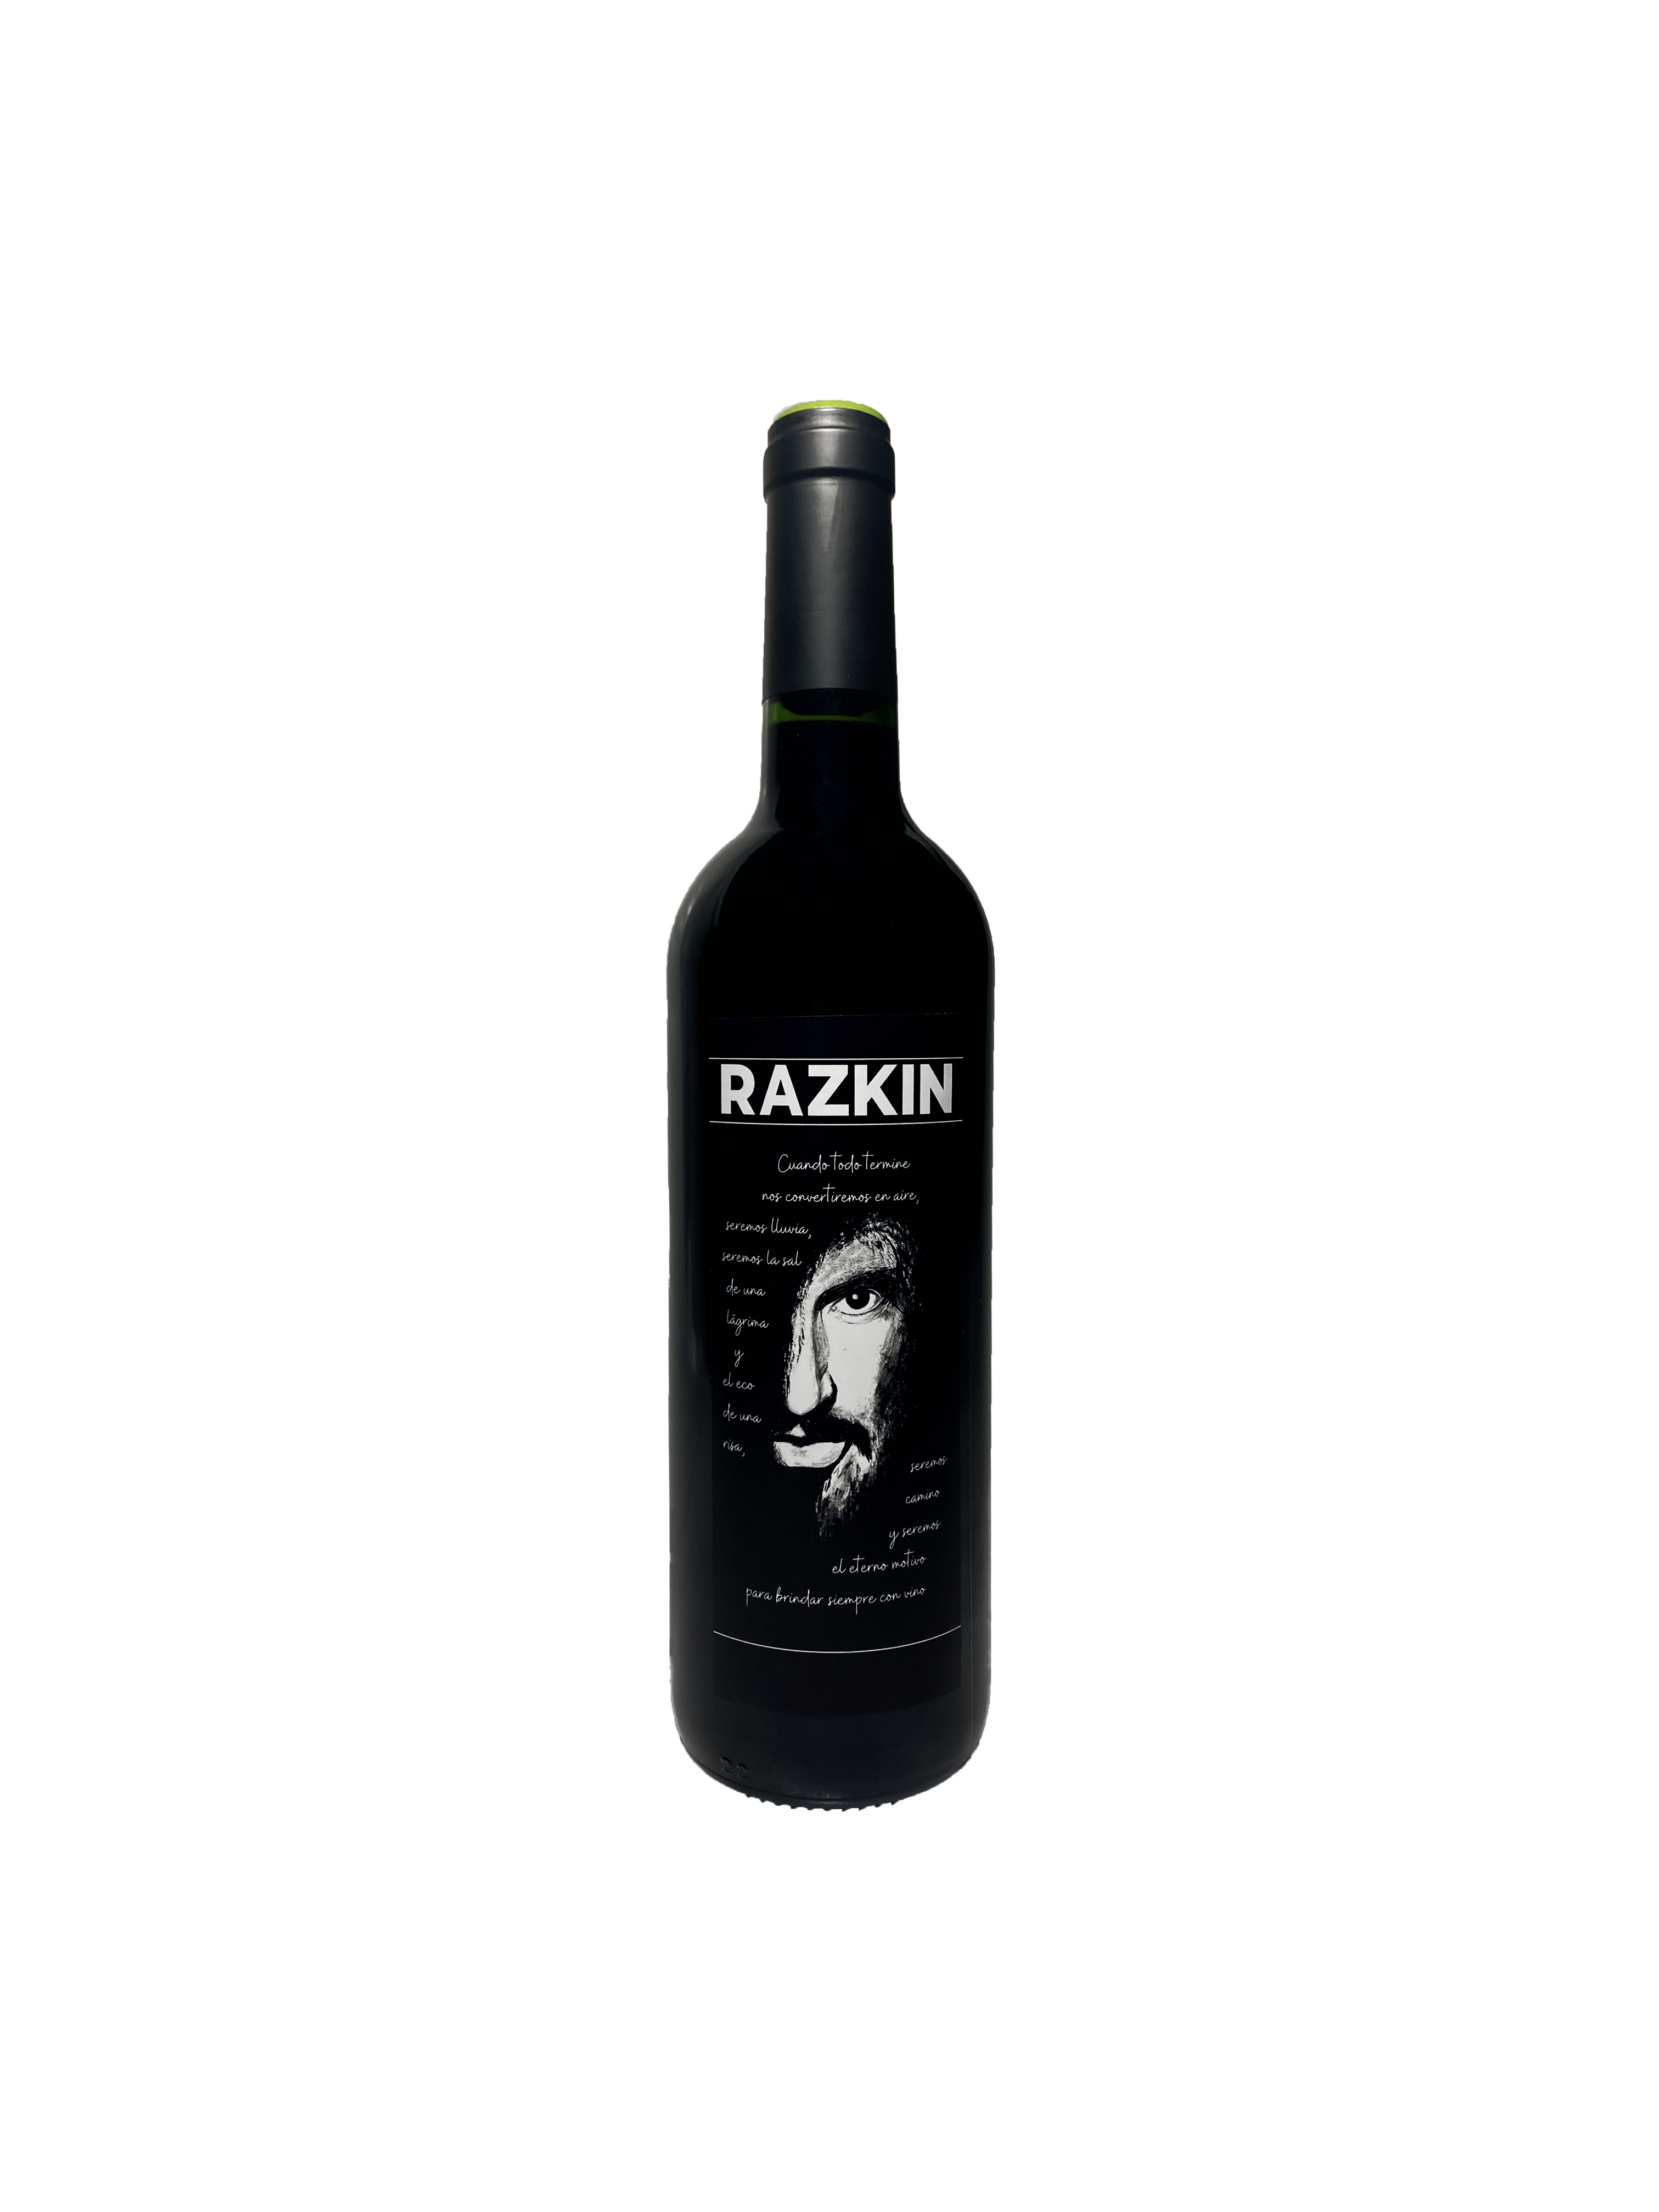 Razkin x BB: Limited Edition (Box of 6 bottles)